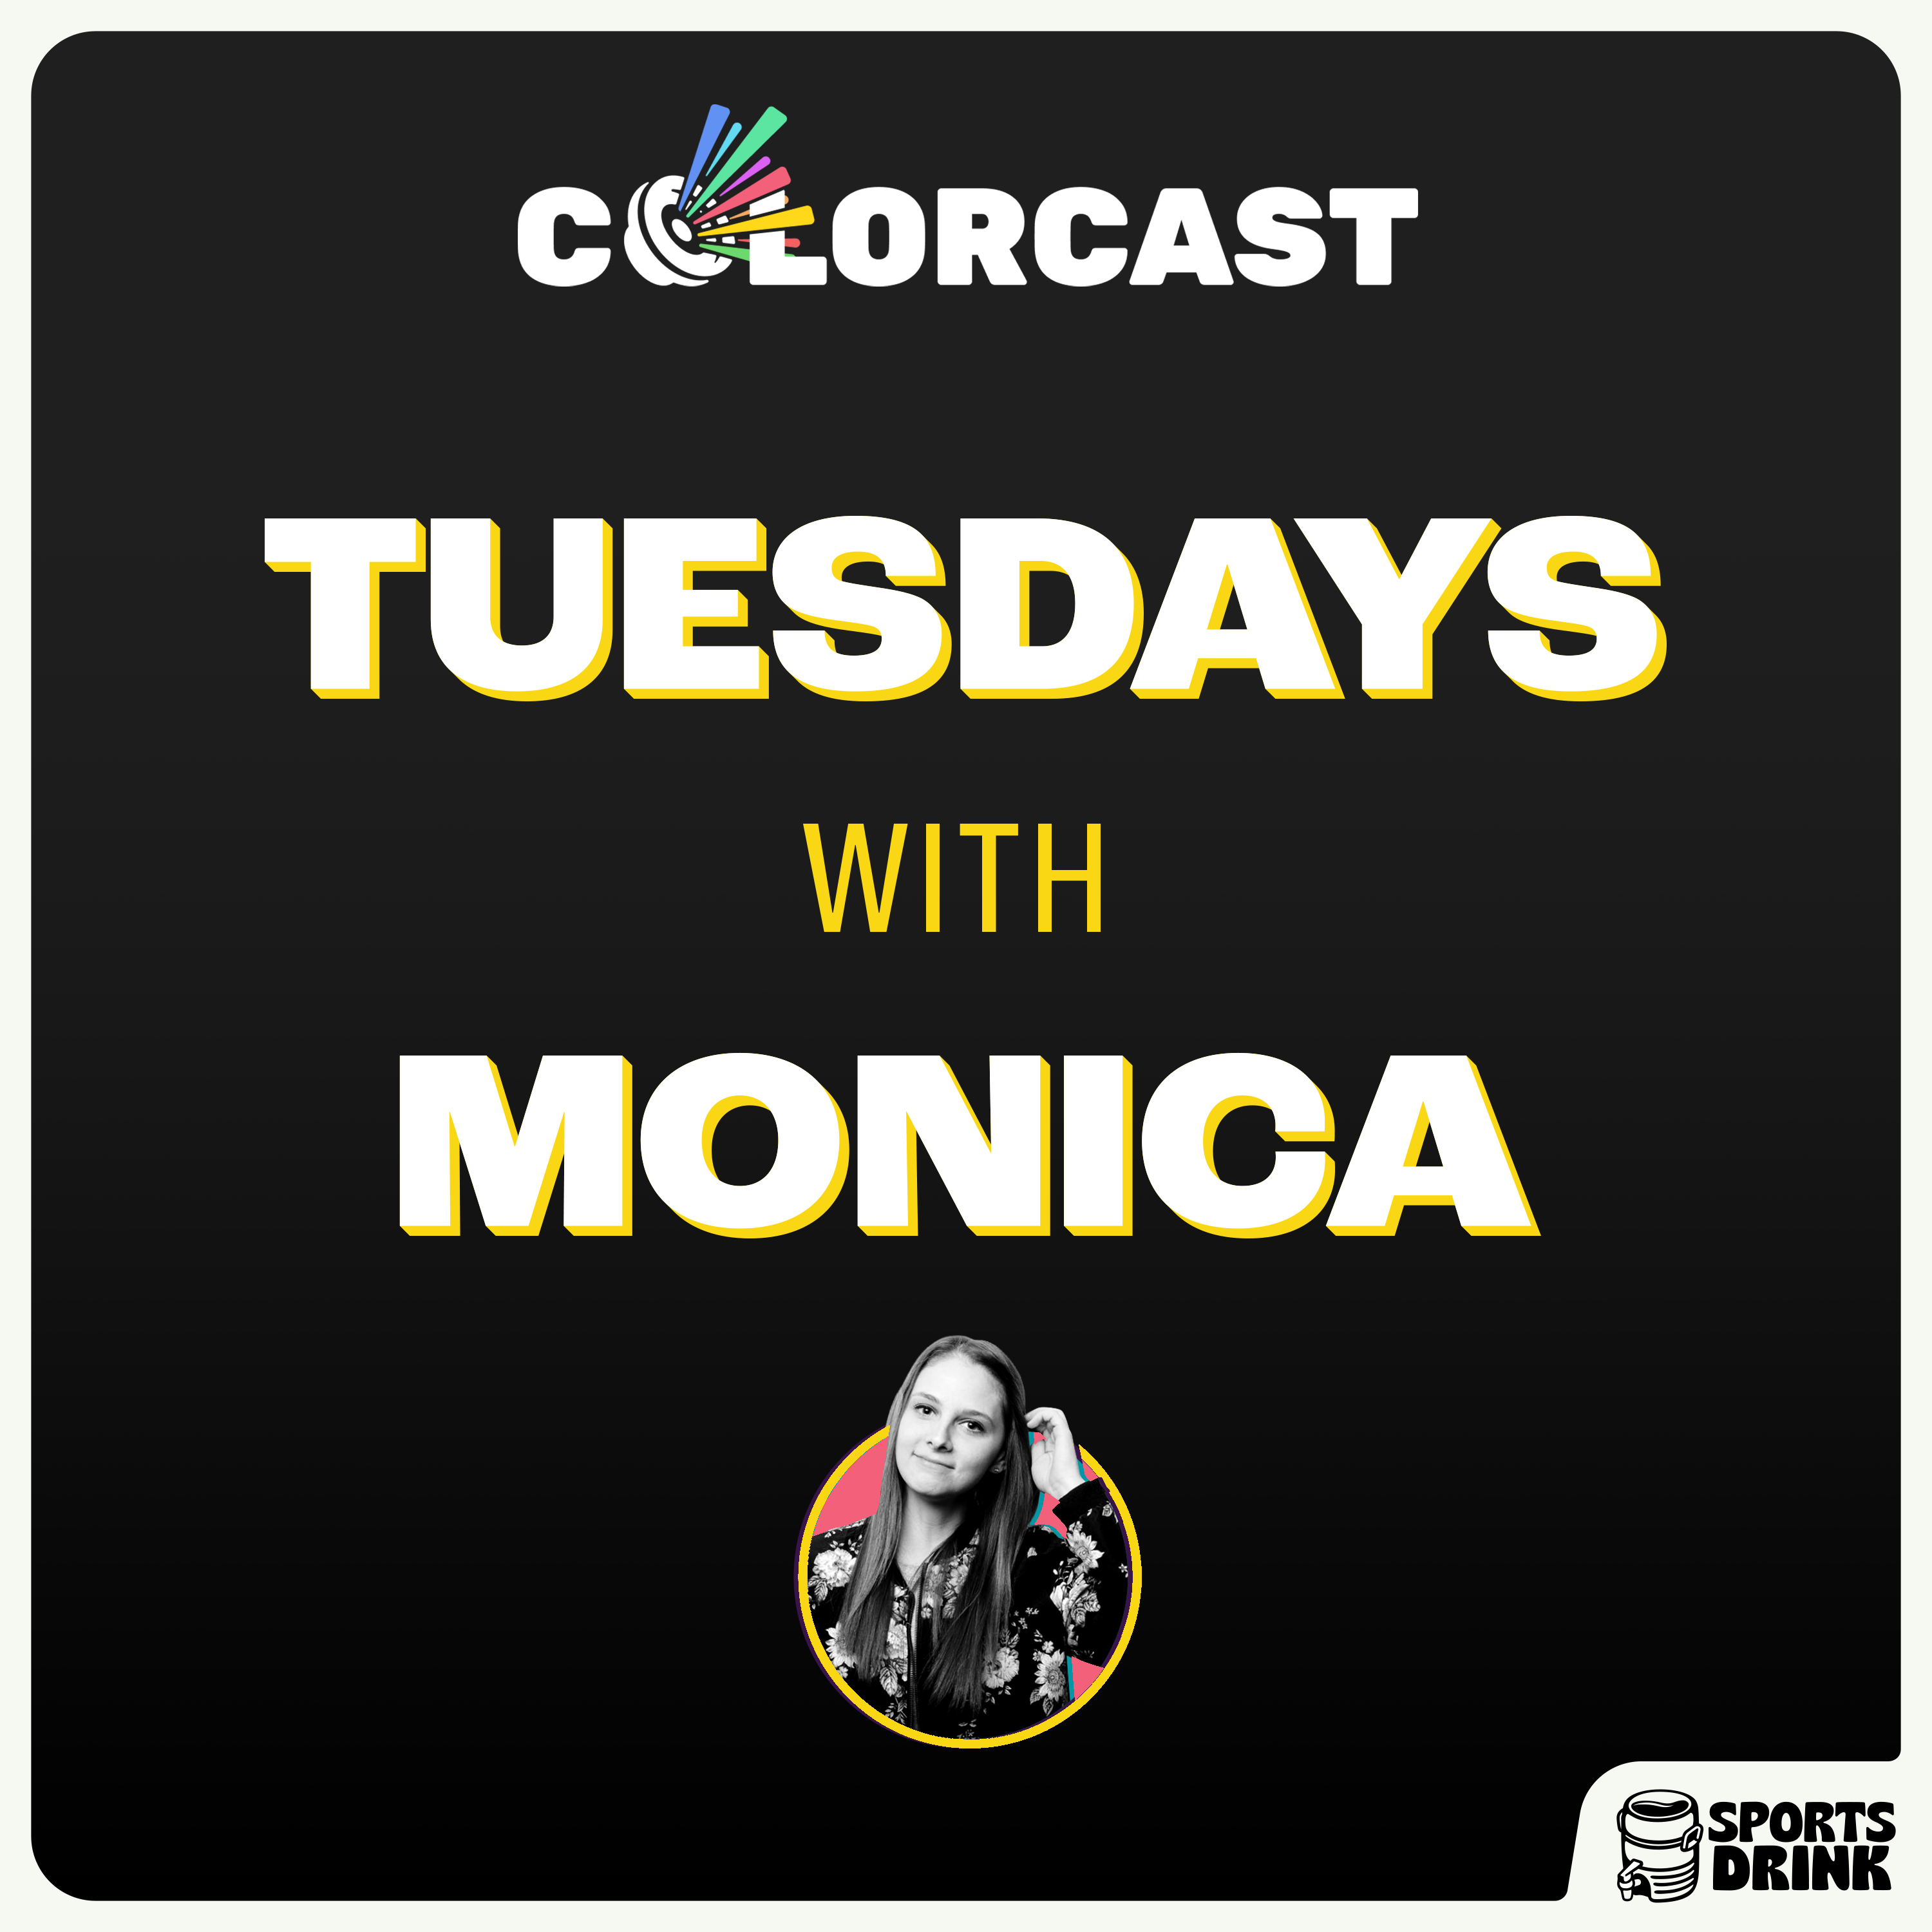 Tuesdays with Monica